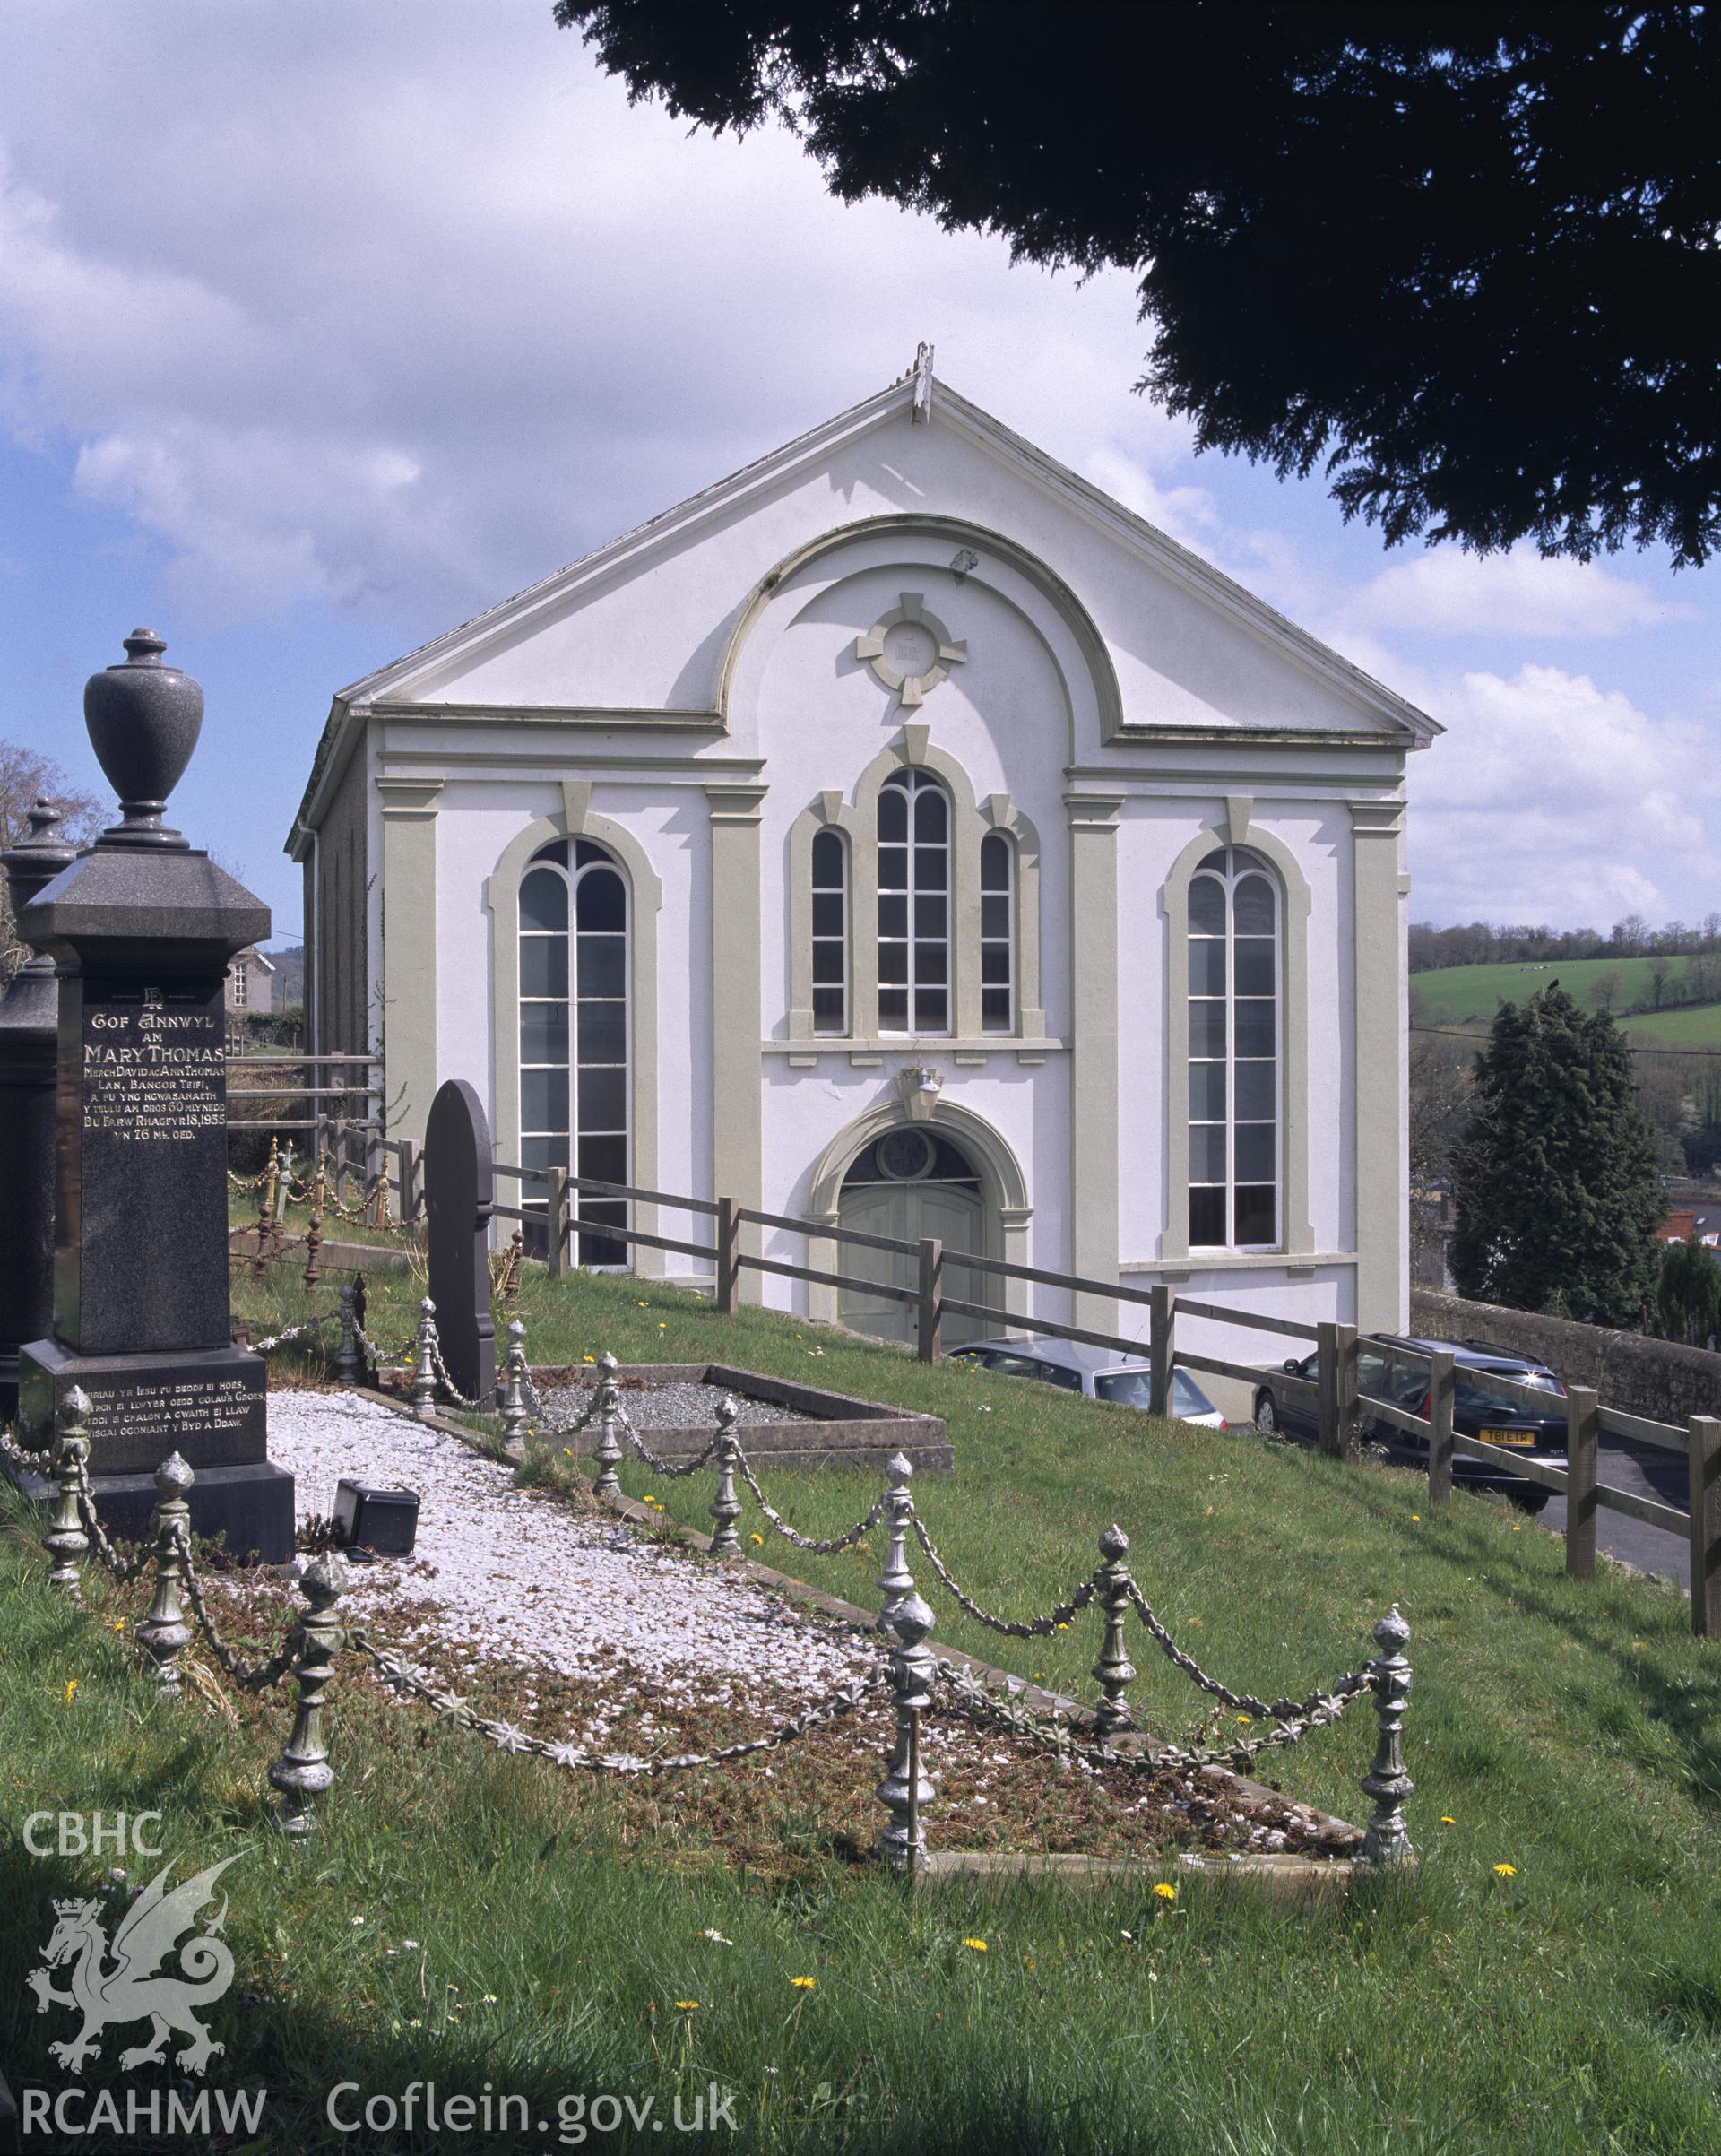 RCAHMW colour transparency showing exterior view of Seion Chapel, Llandysul